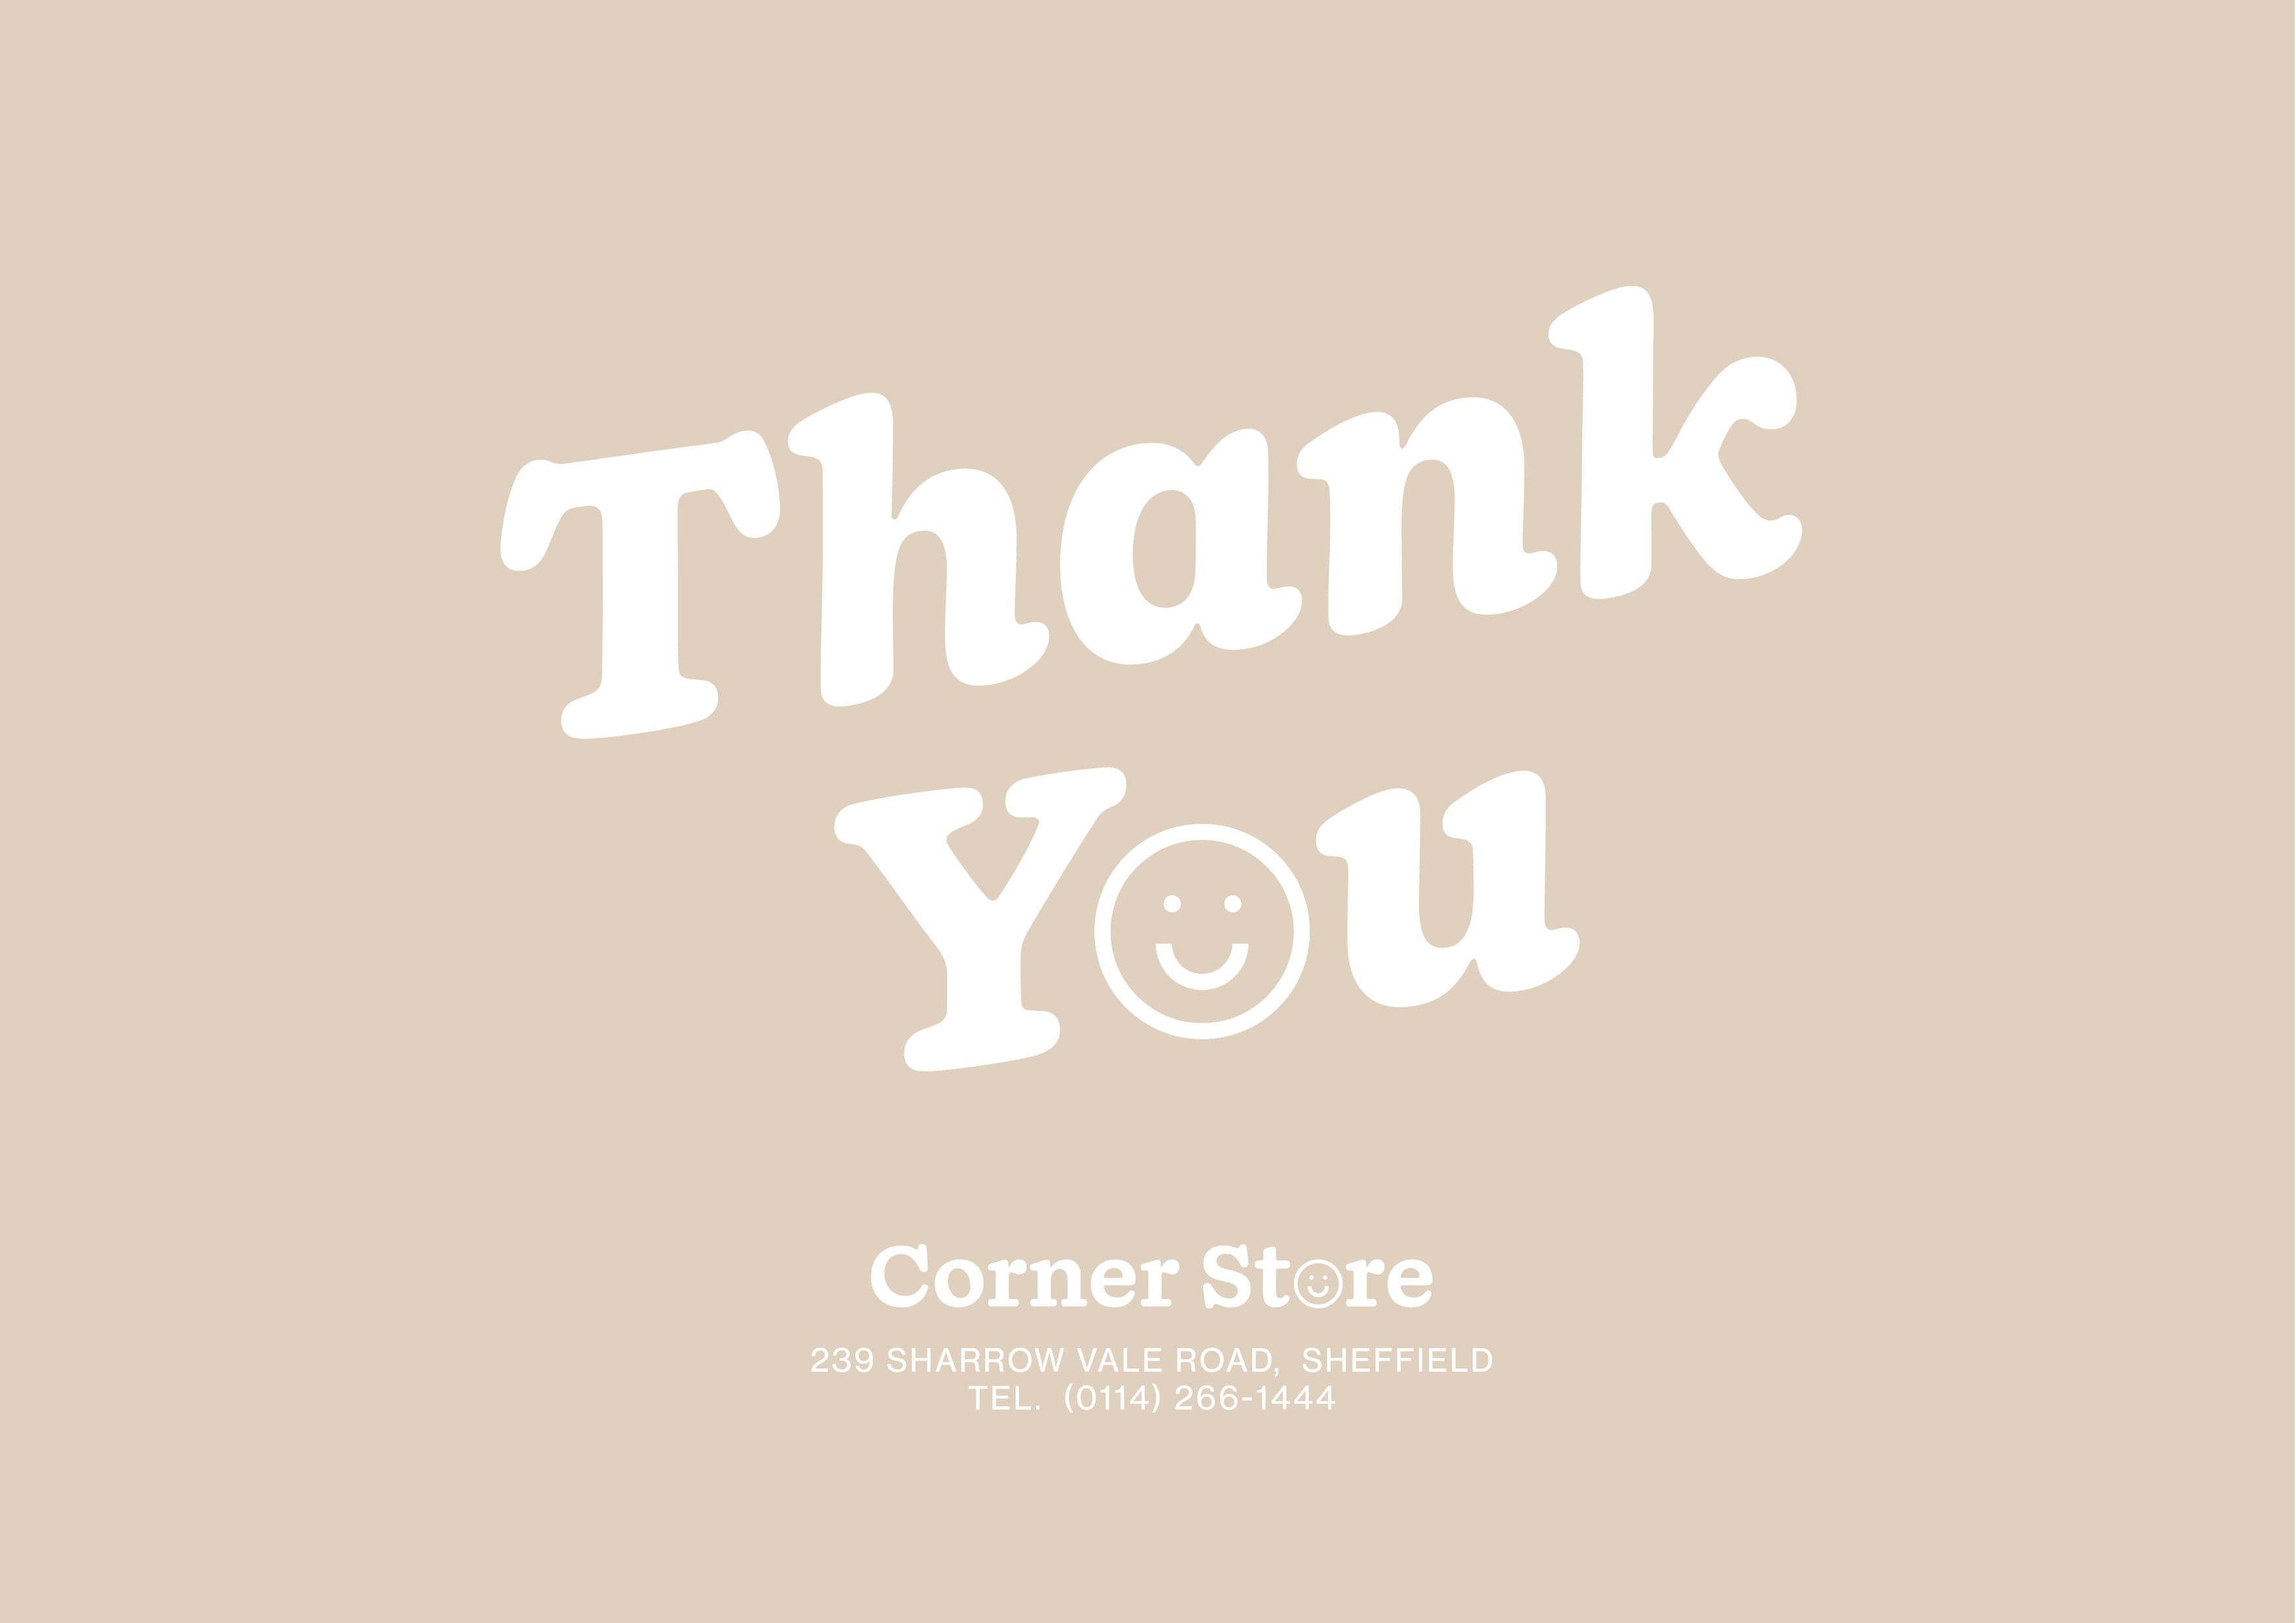 Corner Store thank you logotype